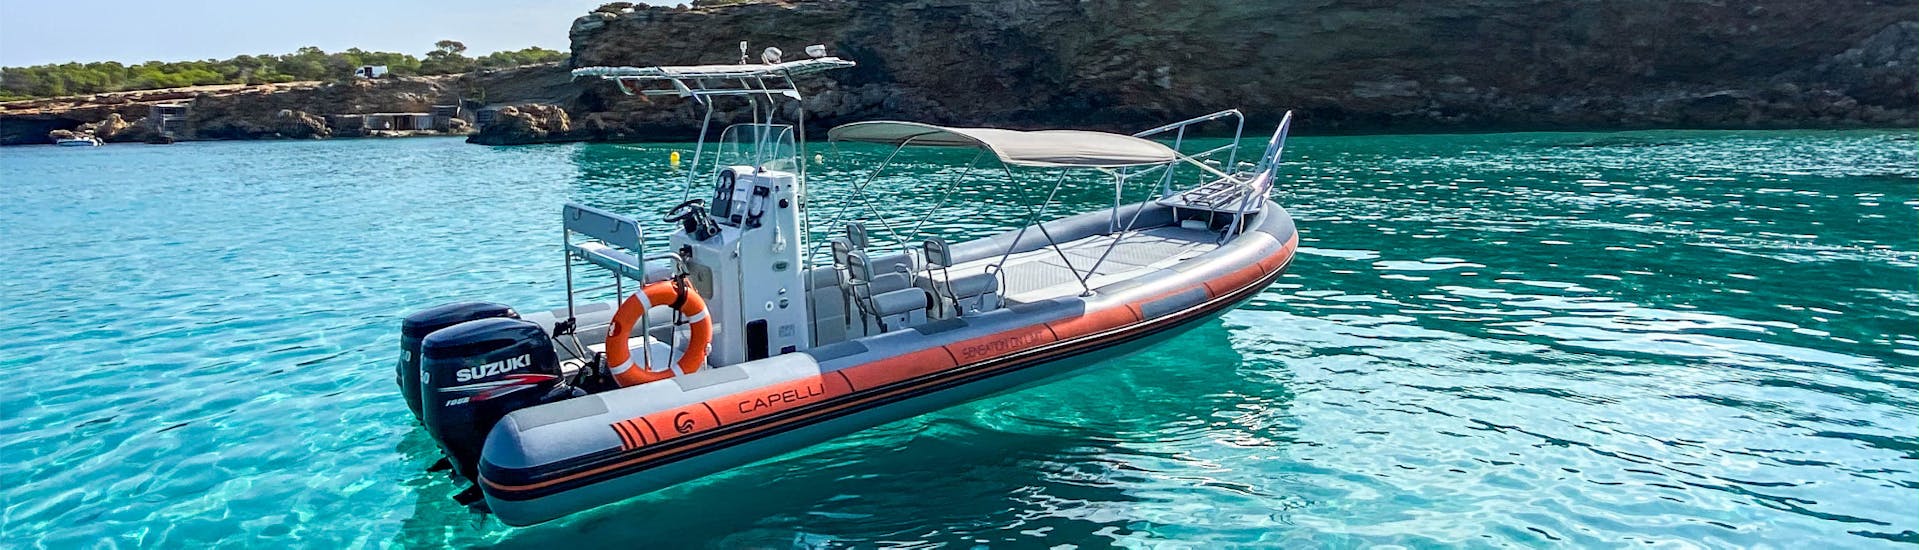 Un bateau à louer à Ibiza avec Es Vedra Charter Ibiza avec permis jusqu'à 12 personnes.